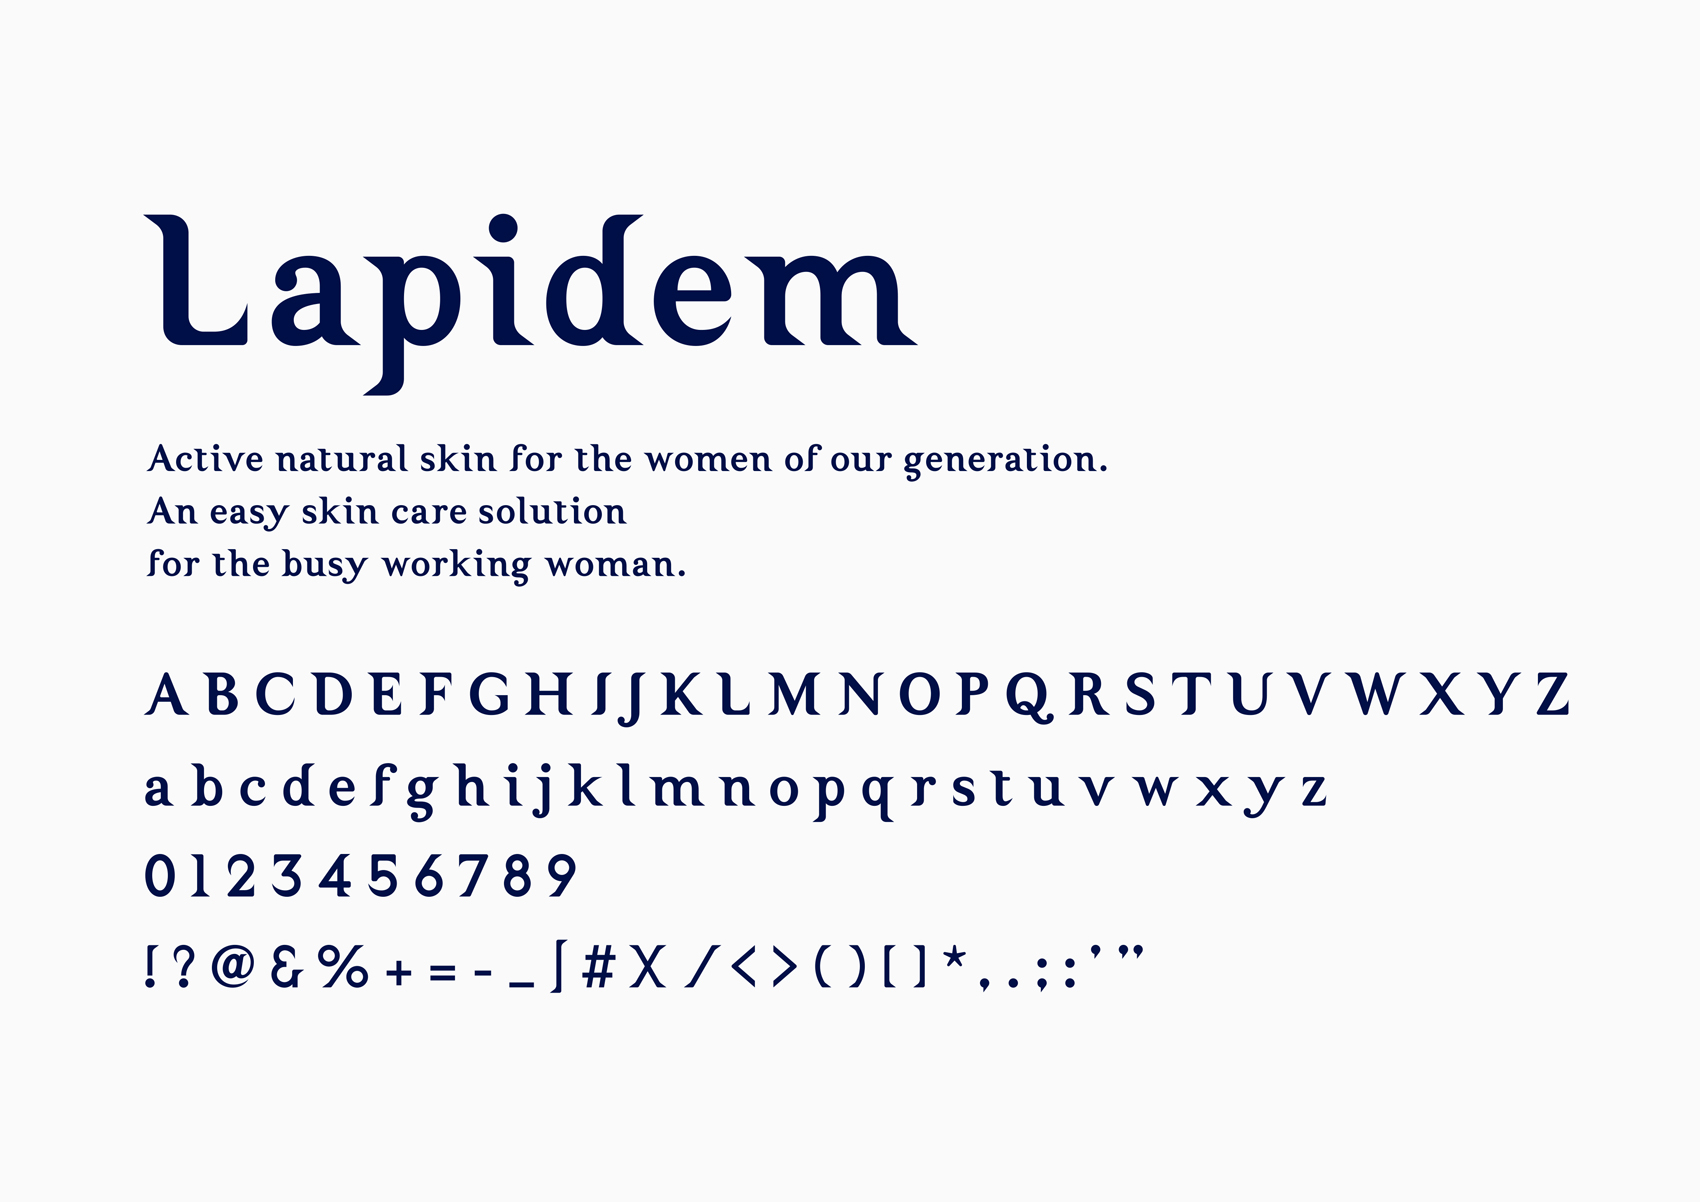 Lapidem_logo/typeface